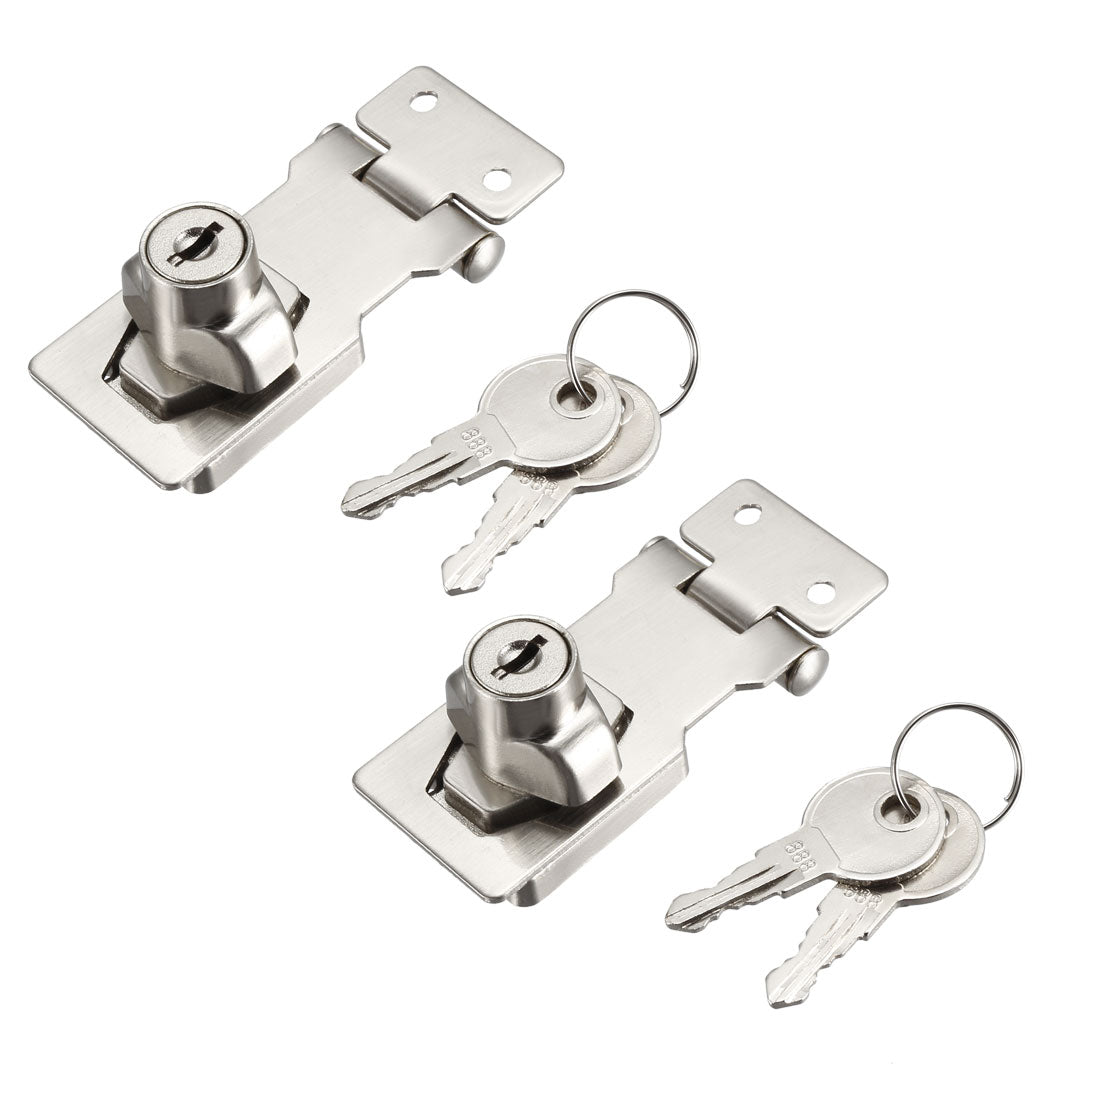 uxcell Uxcell Keyed Hasp Lock 80mm Twist Knob Keyed Locking Hasp for Door Cabinet Keyed Alike Silver Tone 2 Pcs